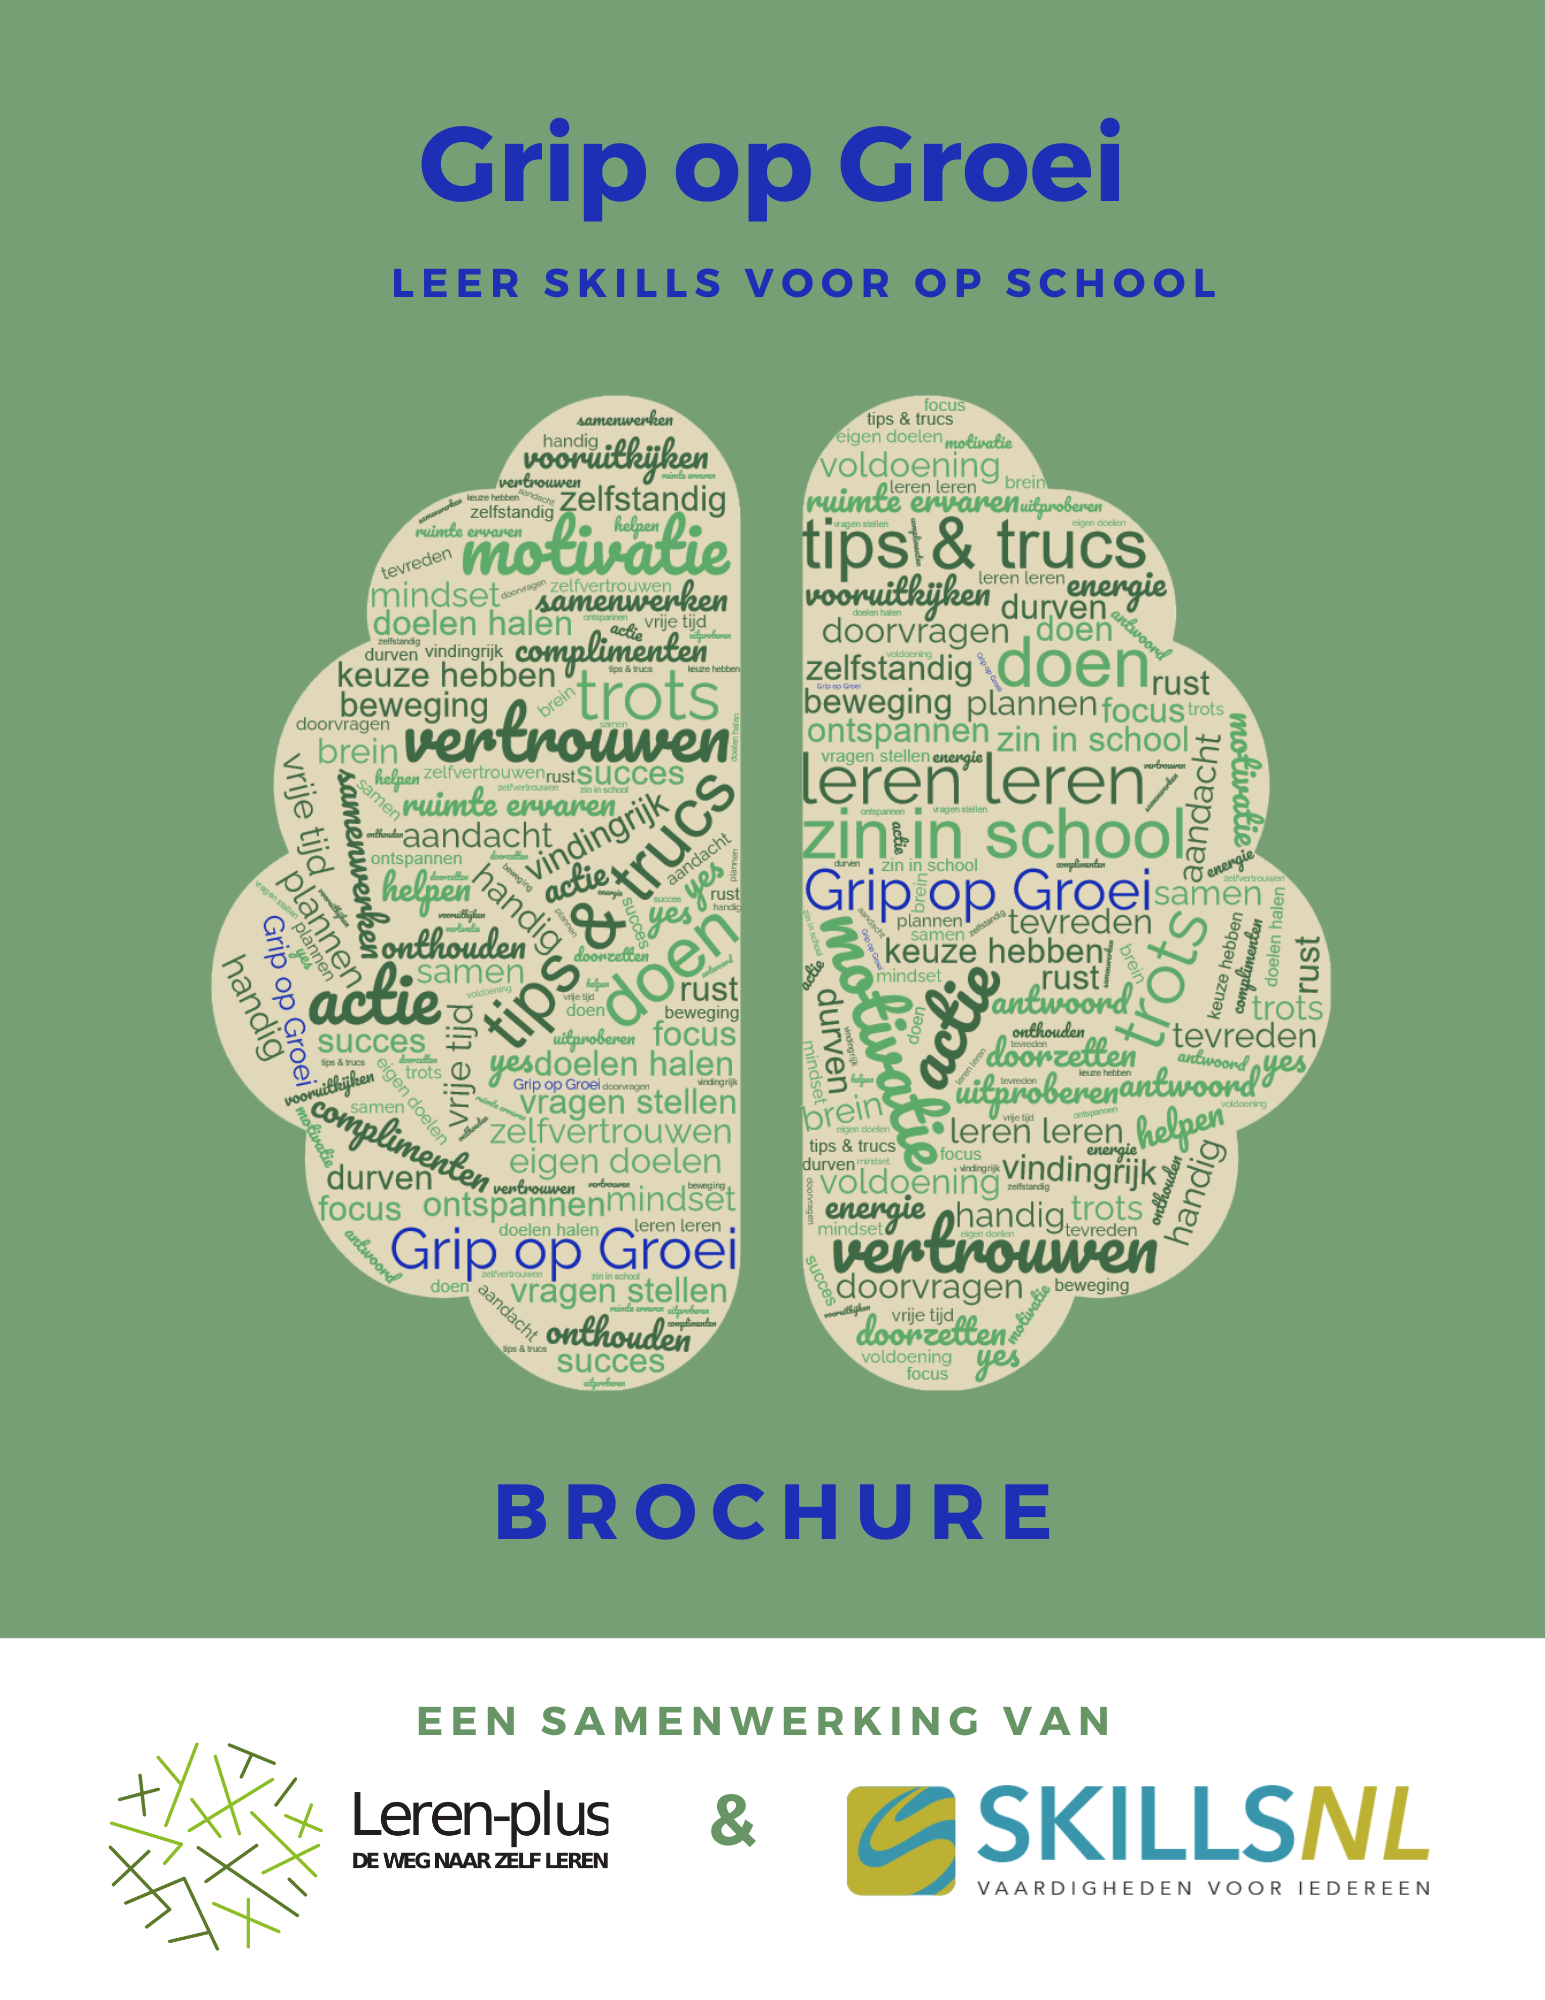 SkillsNL_vaardighedenvooriedereen_Voorblad Brochure Grip op Groei SkillsNL en Leren-plus